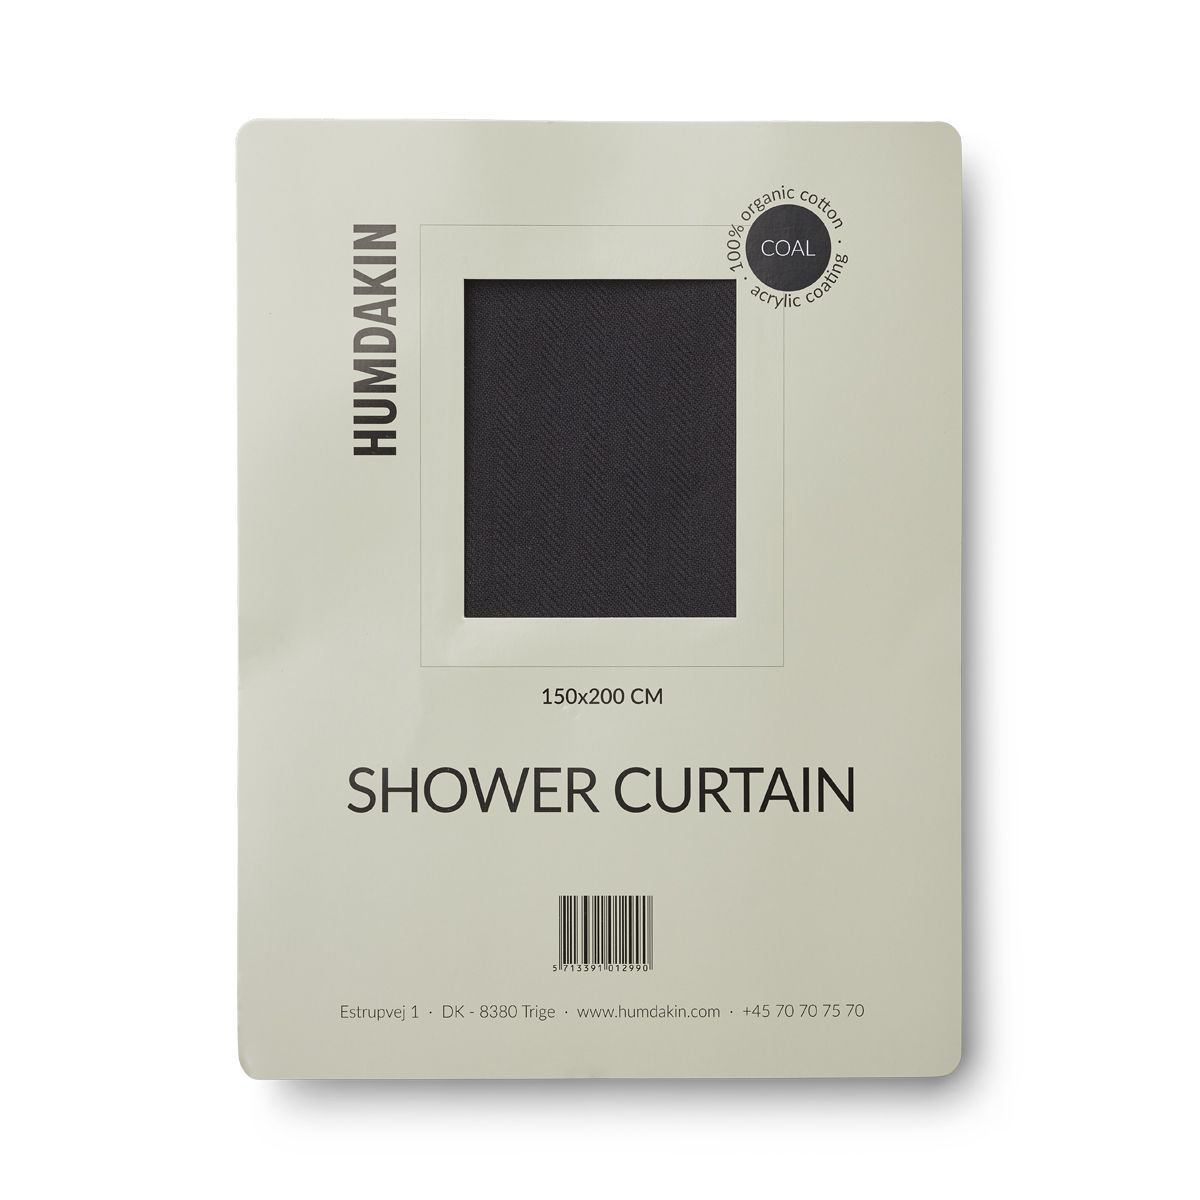 Humdakin Shower Curtain Made Of Organic Cotton, Coal